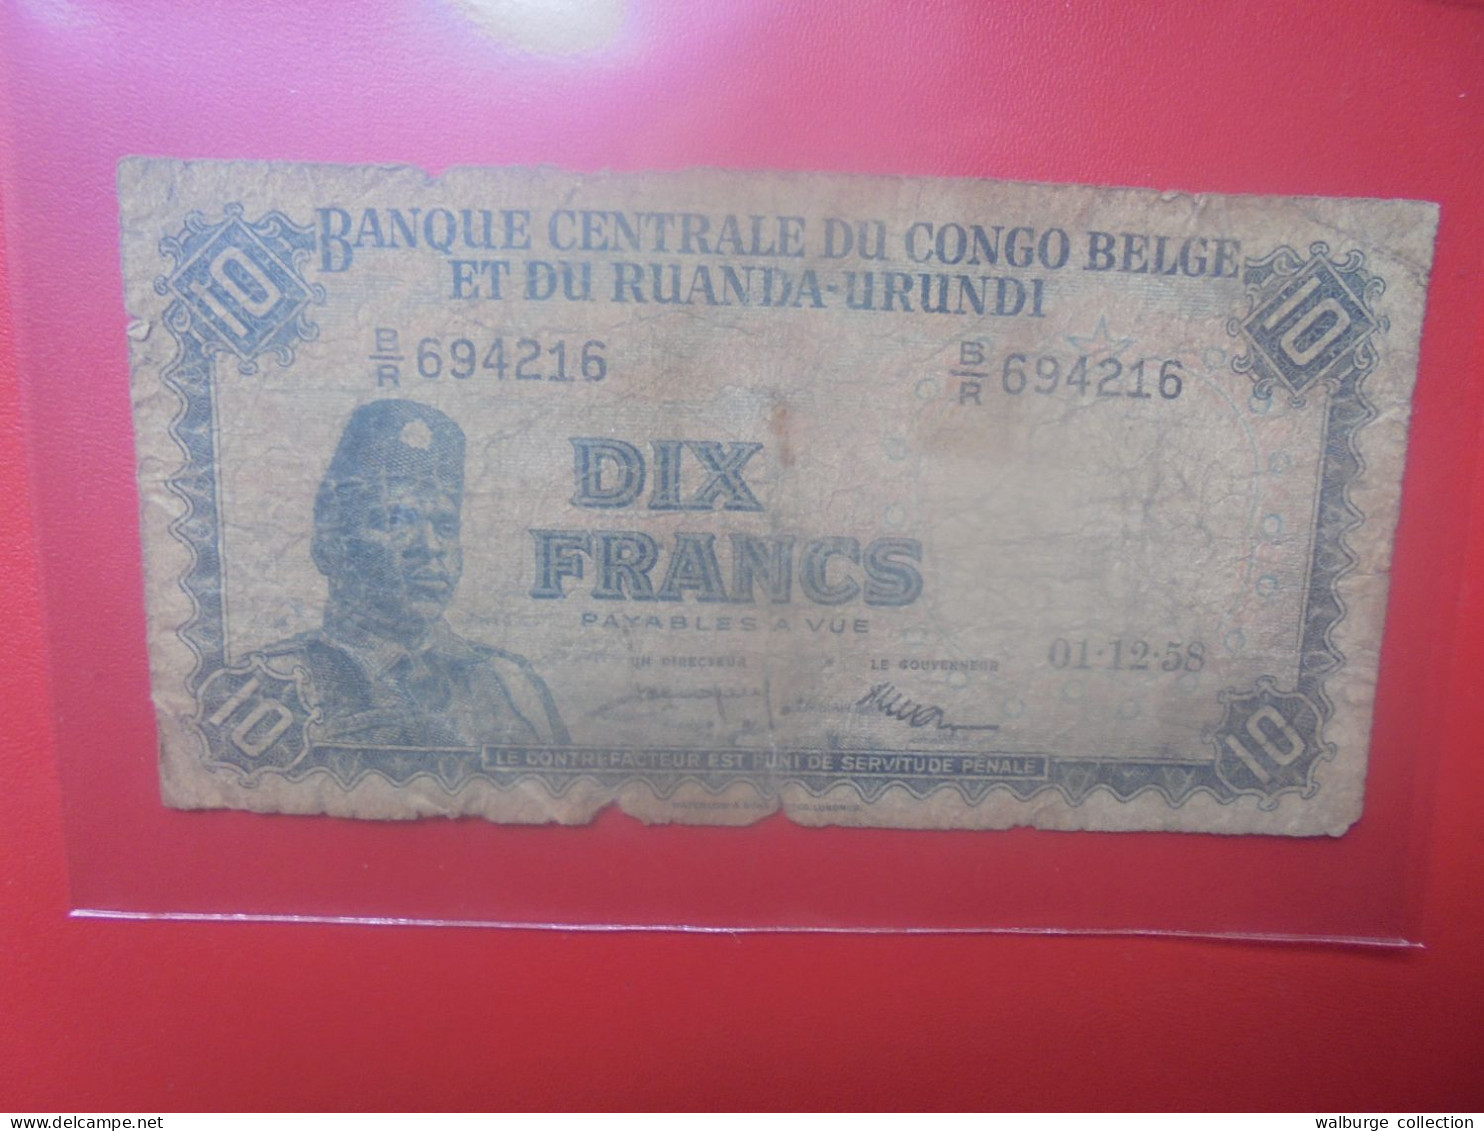 CONGO BELGE 10 FRANCS 1-12-58 Circuler (B.33) - Banco De Congo Belga